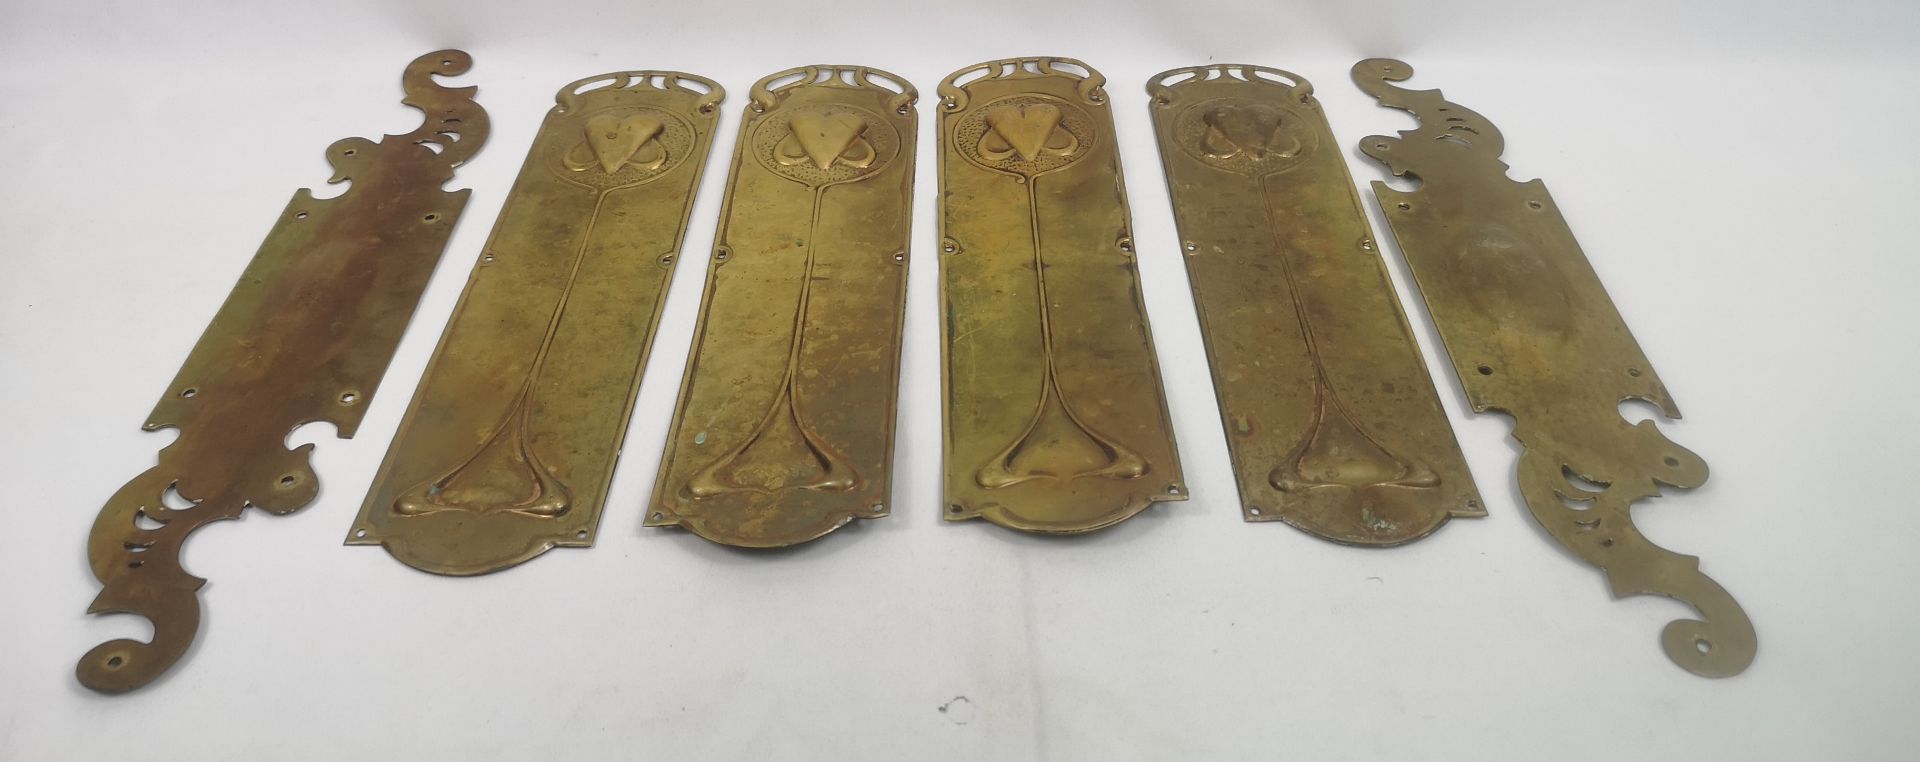 Six art nouveau style brass door plates